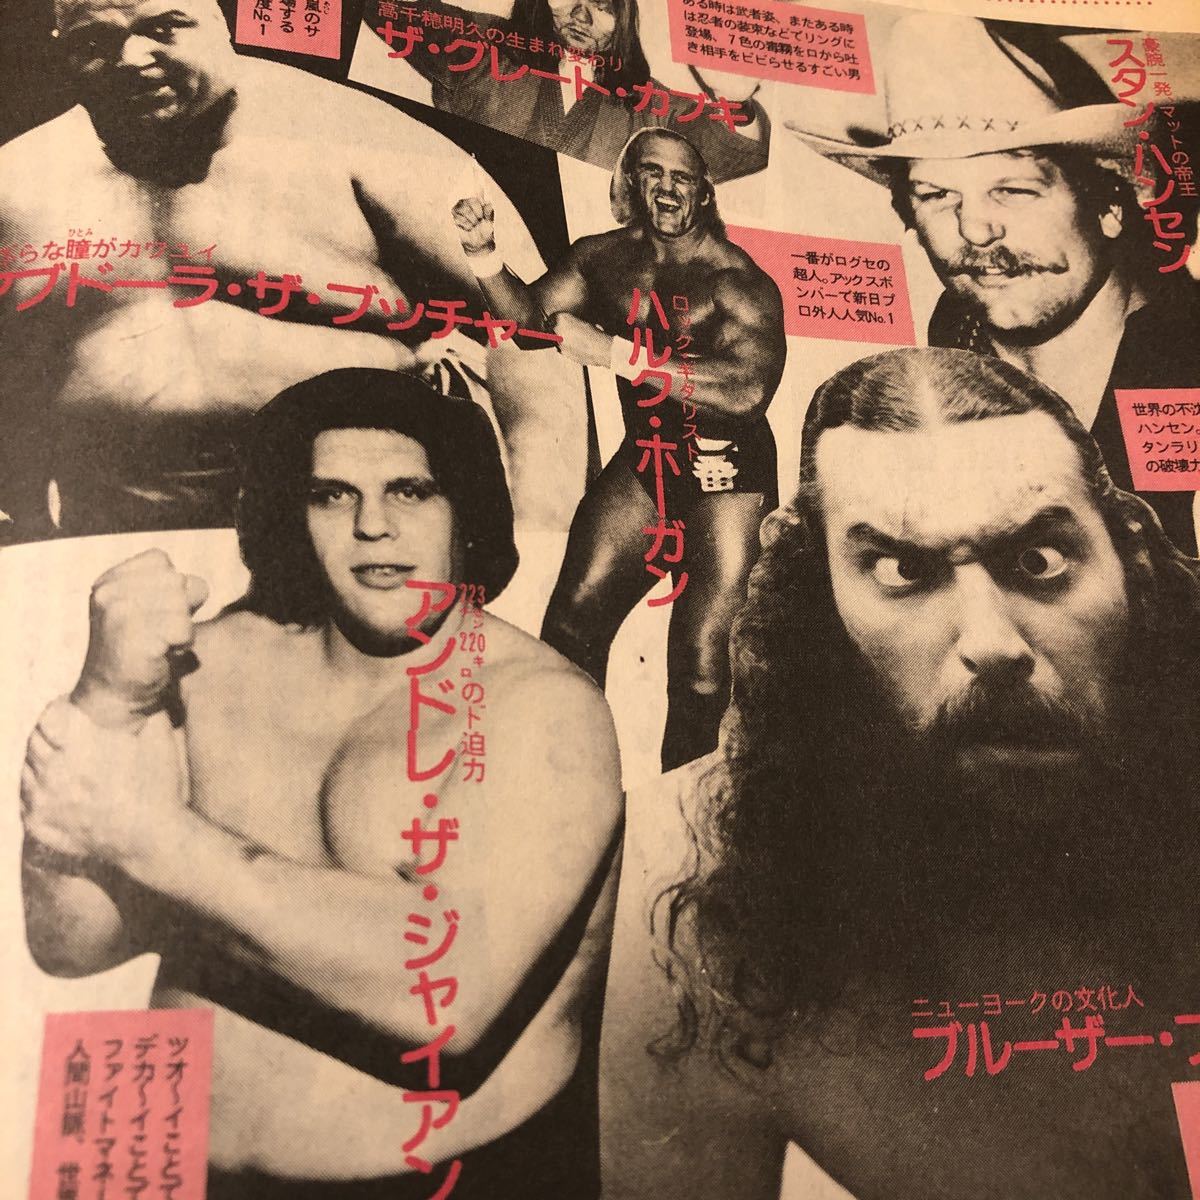  The Television первое поколение Tiger Mask Showa Retro New Japan Professional Wrestling 